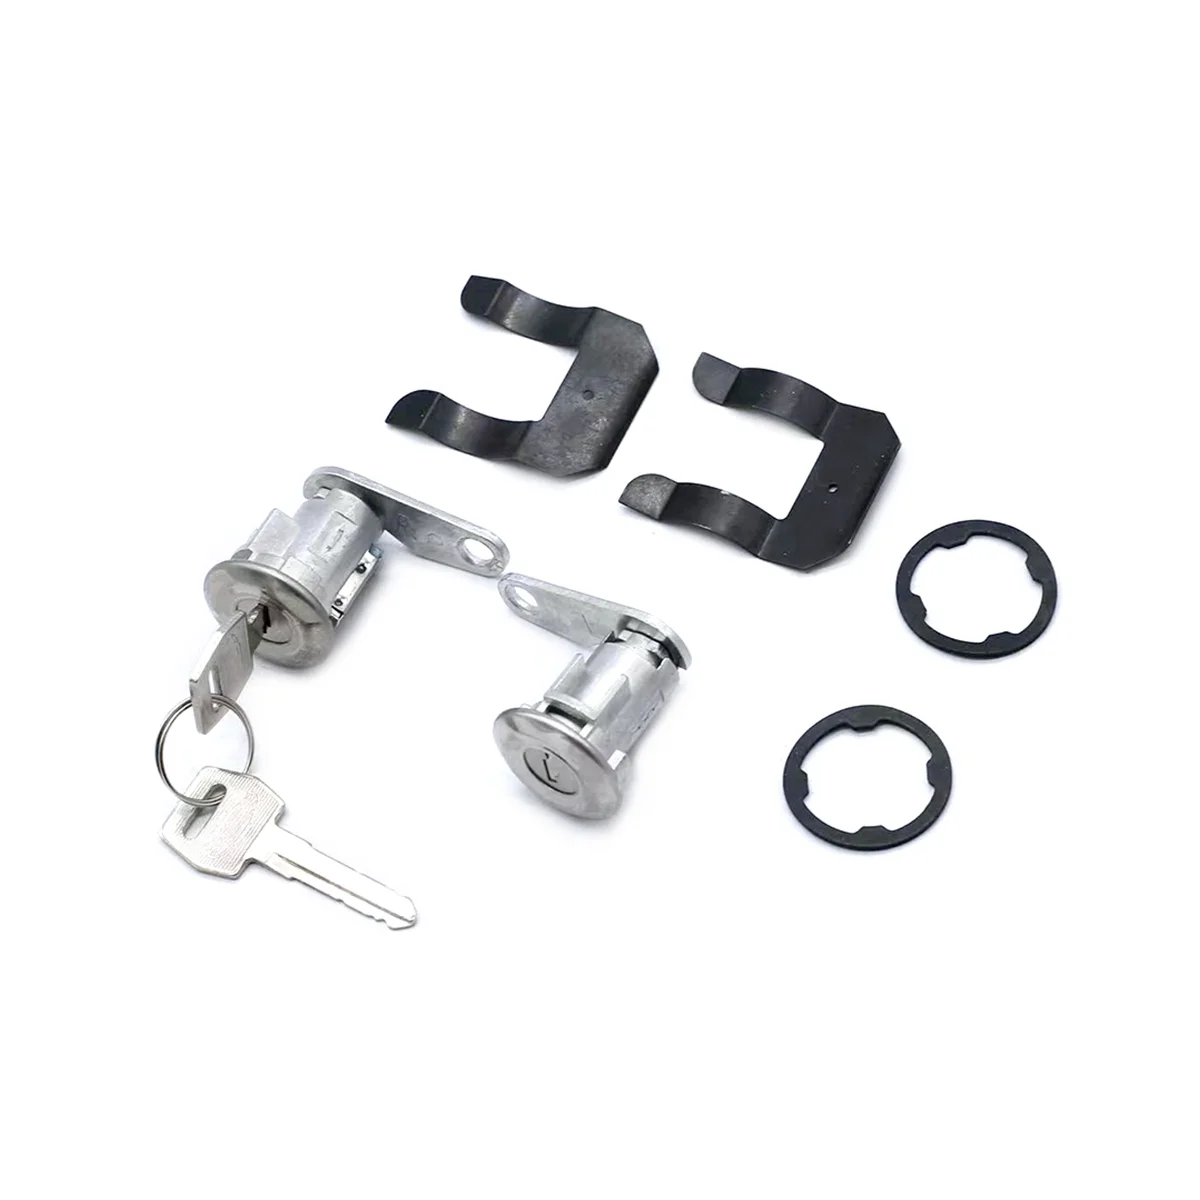 

DL1550 Door Lock Cylinder with Keys for Ford Mercury LTD Mustang Pinto Torino Econoline F100 F150 F250 F350